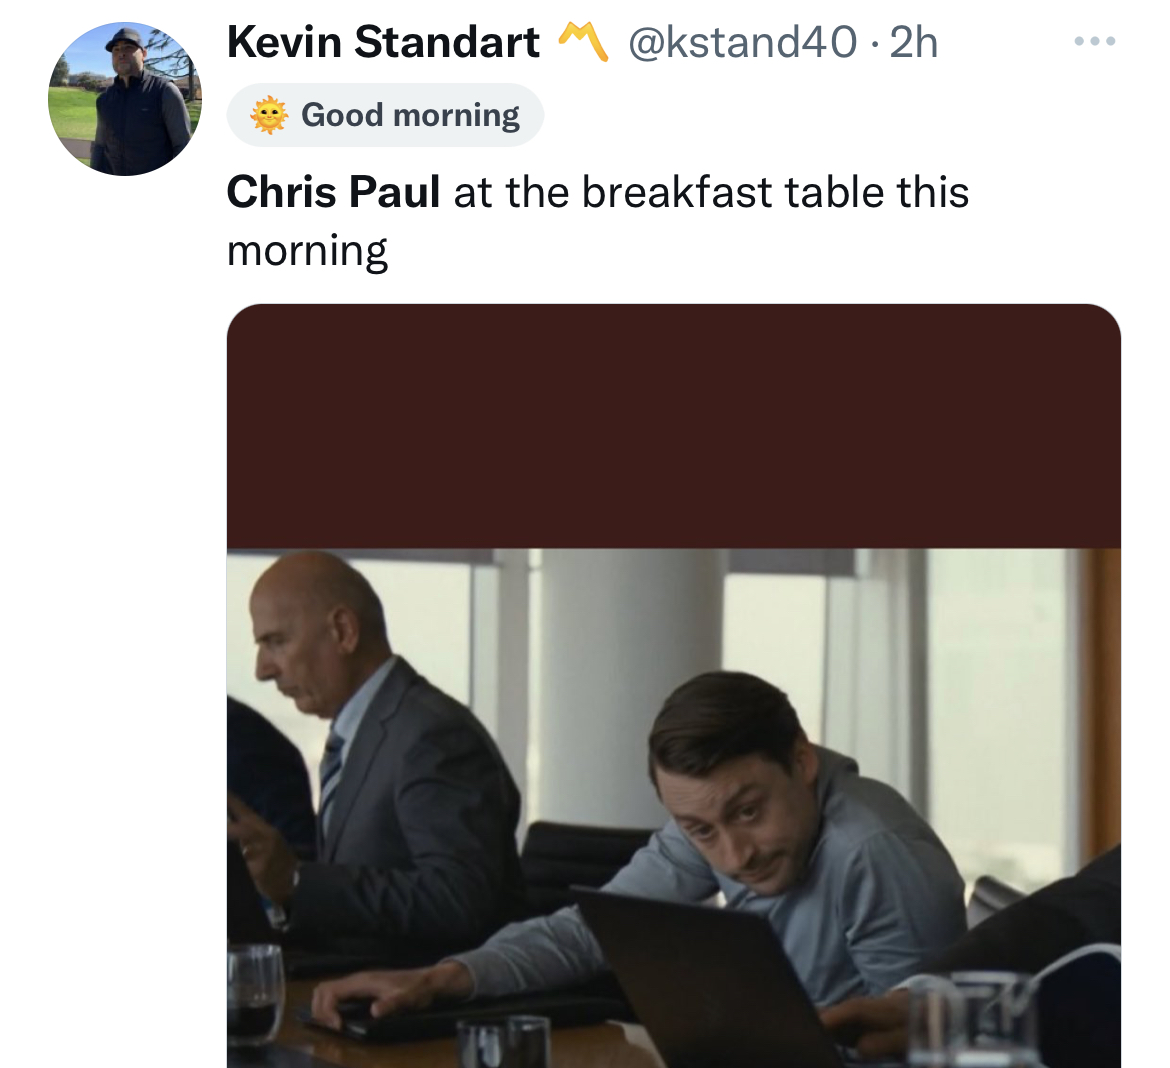 Chris Paul and Kim K memes - roman succession dick - Kevin Standart Good morning Chris Paul at the breakfast table this morning 19